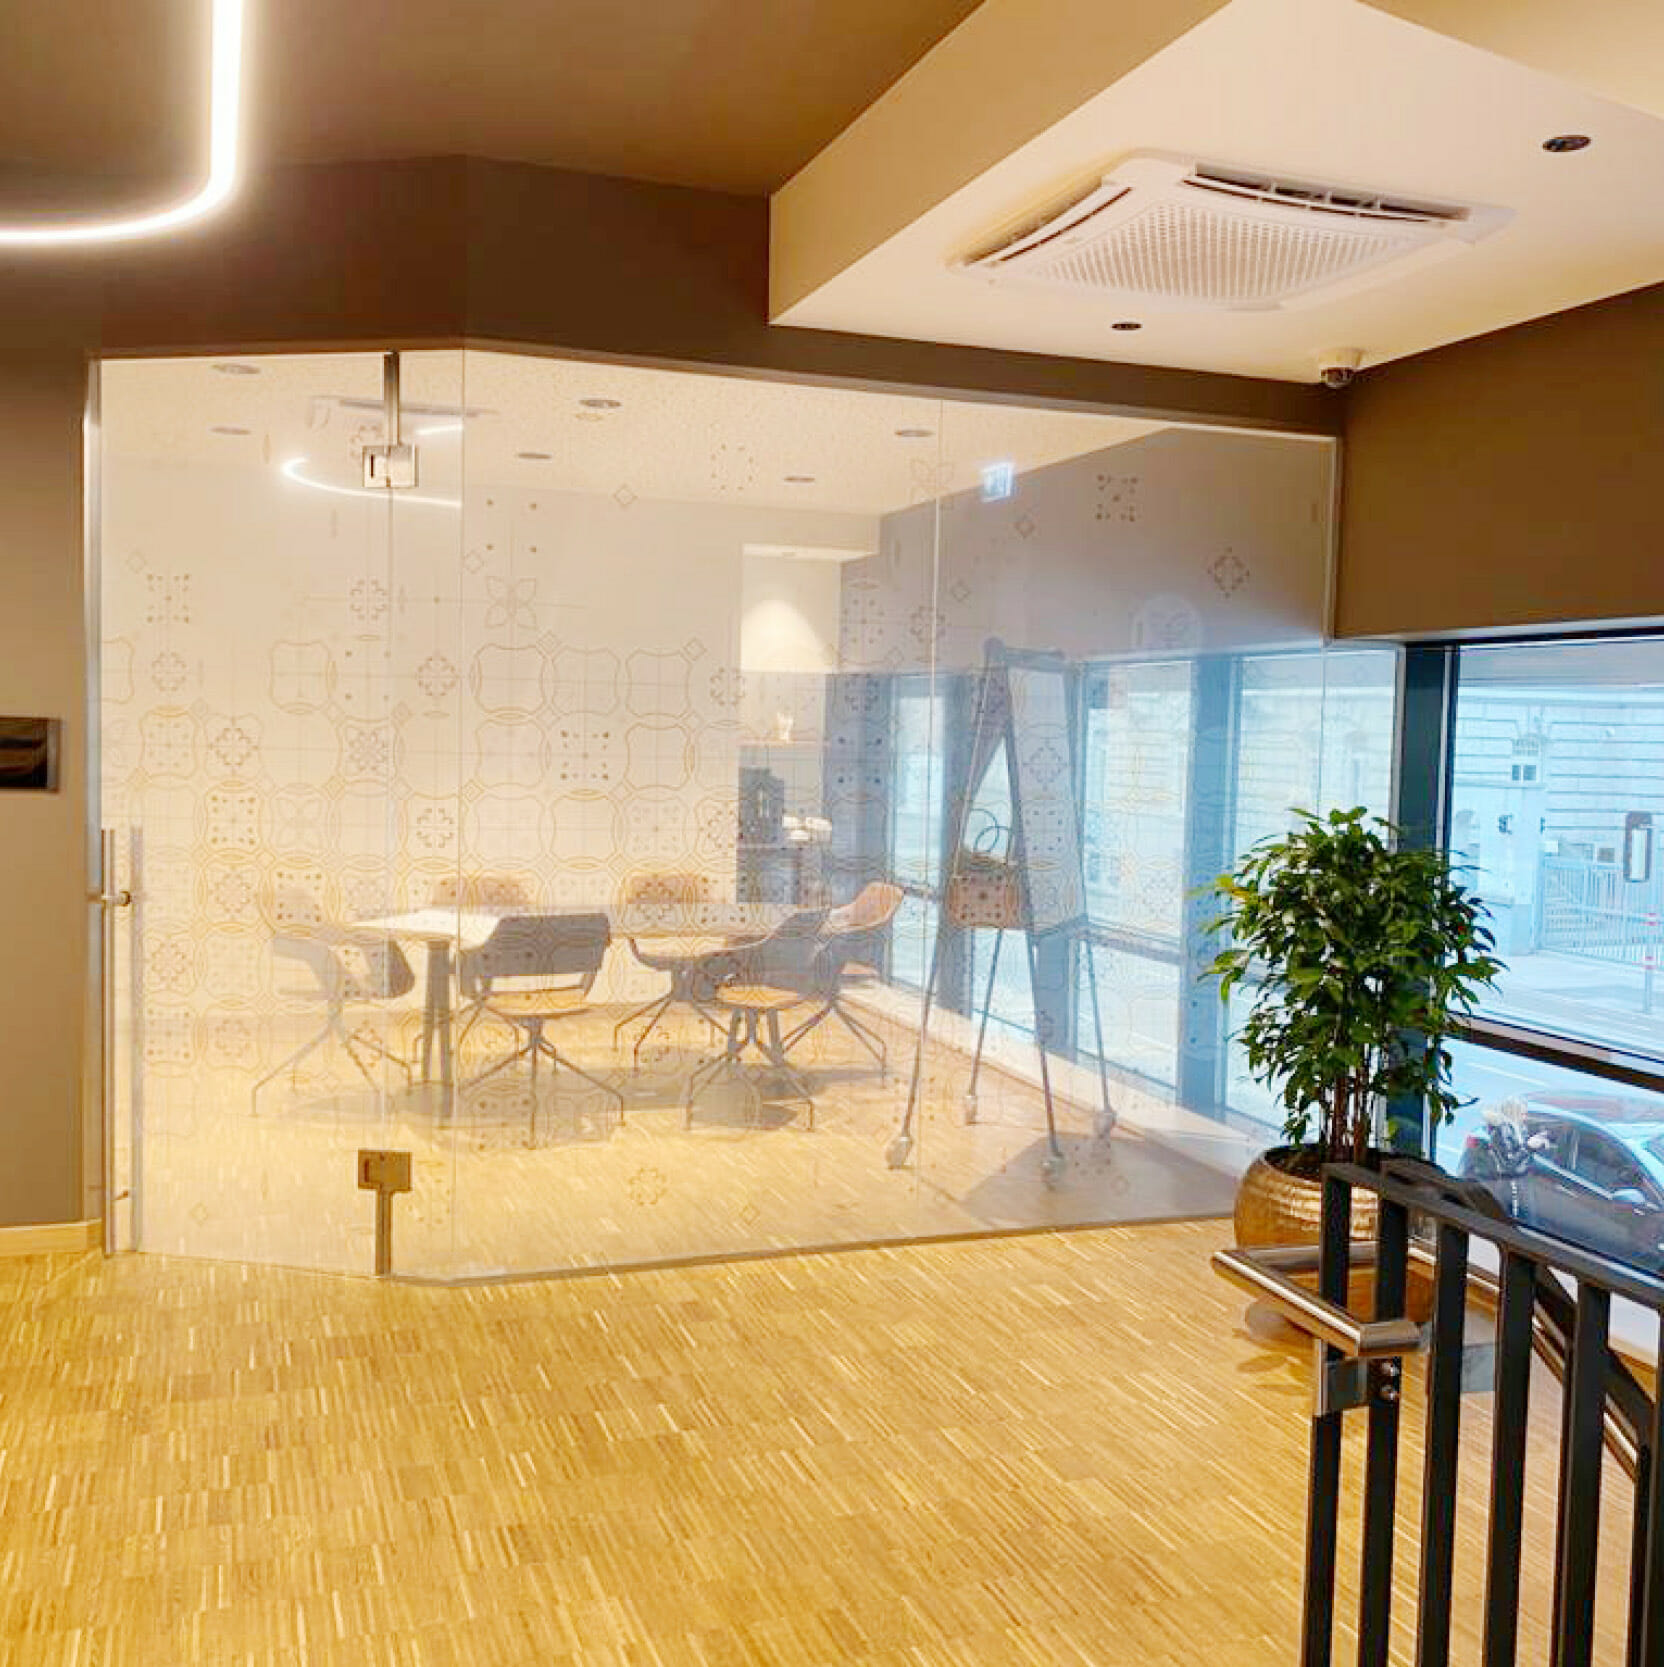 Mezzanine Meetings & Events - Switchable room glazing